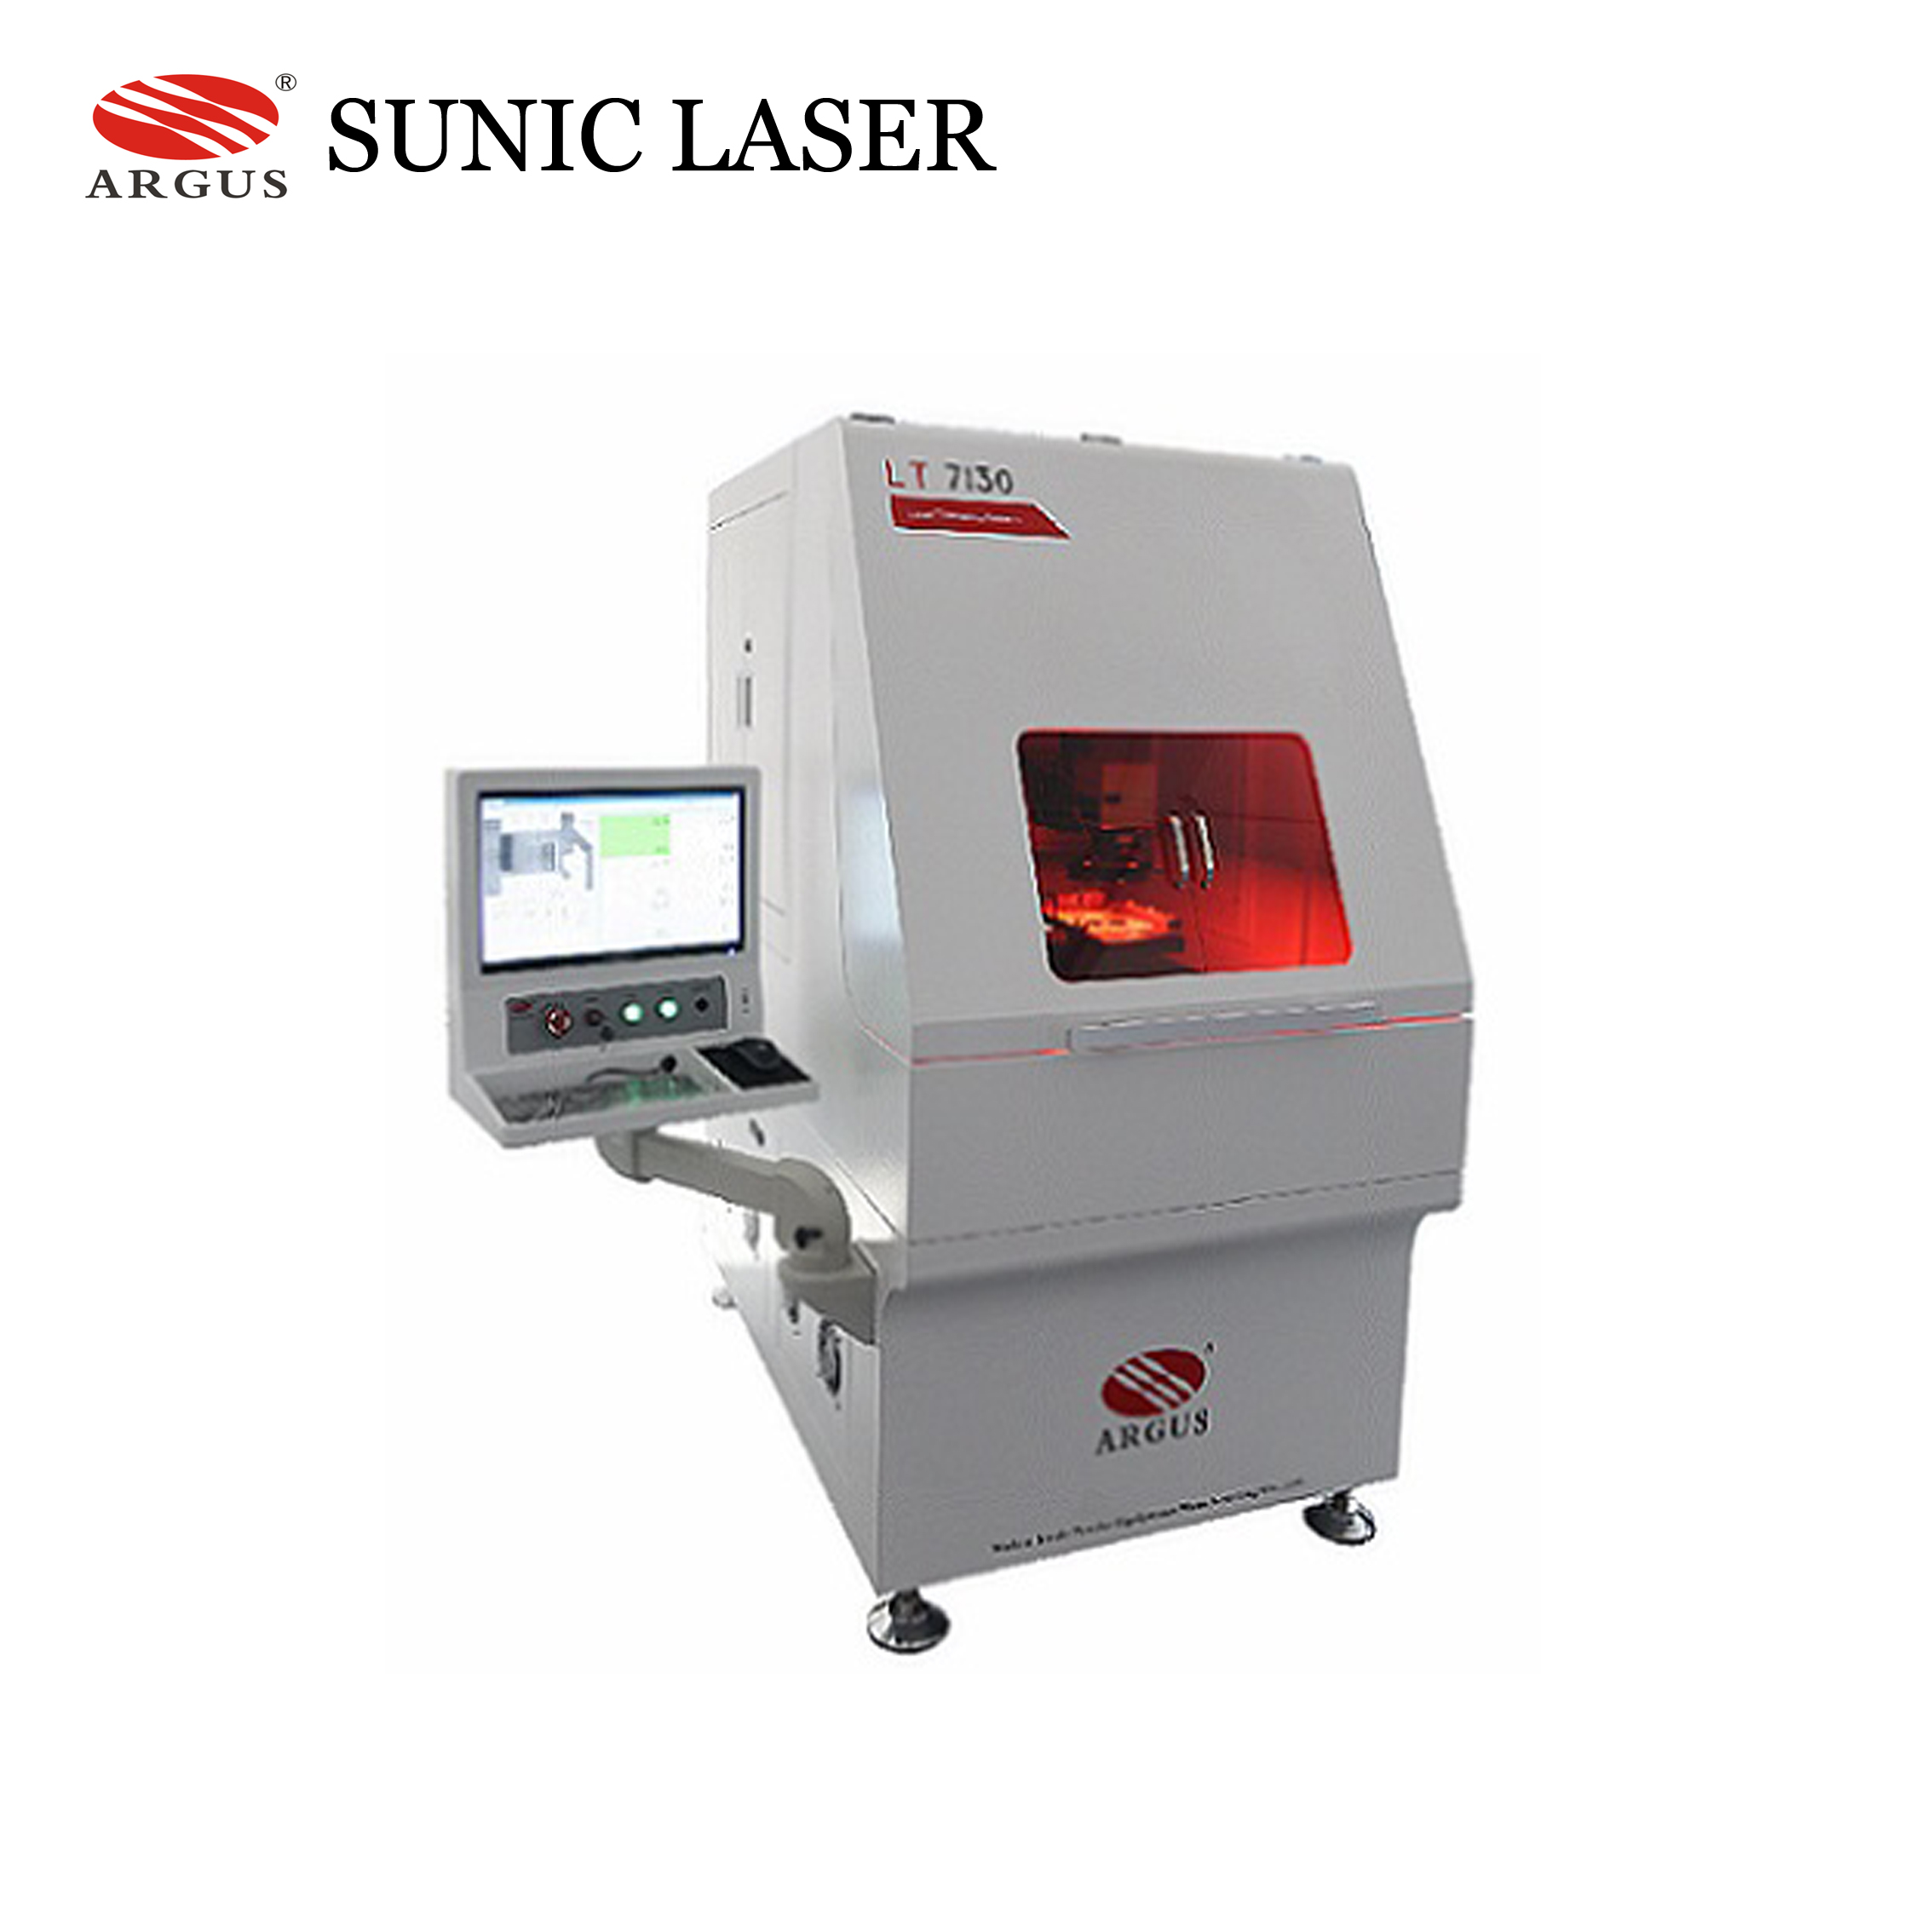 Resistance Laser Trimming Machine Lt-7130 10W for PCB Board IC Resistance Adjustment